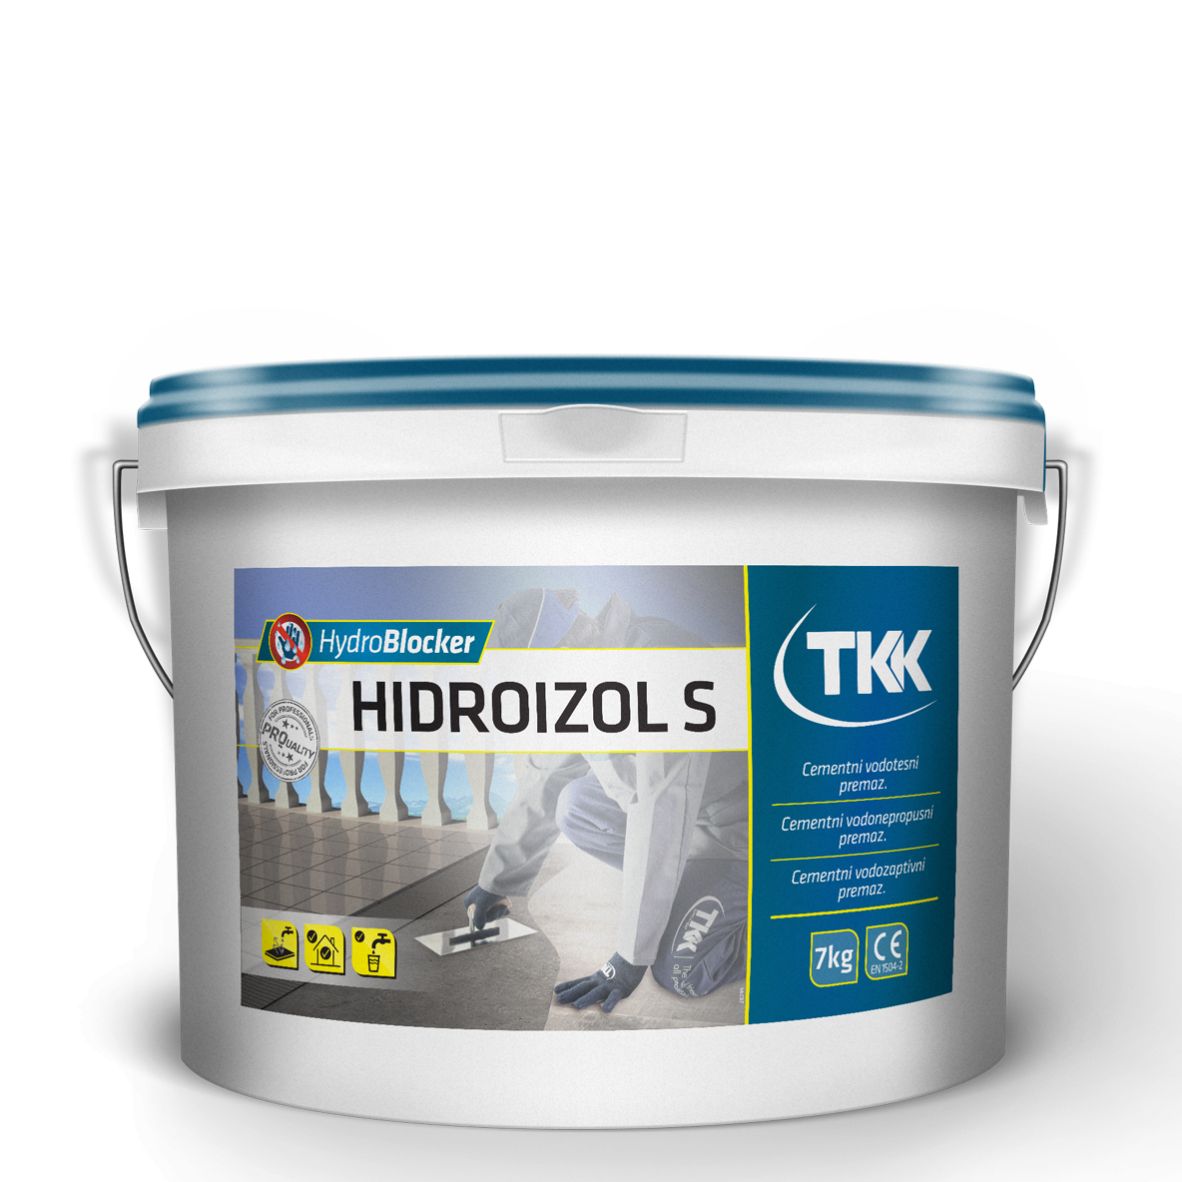 TKK Hydroblocker Hidroizol S